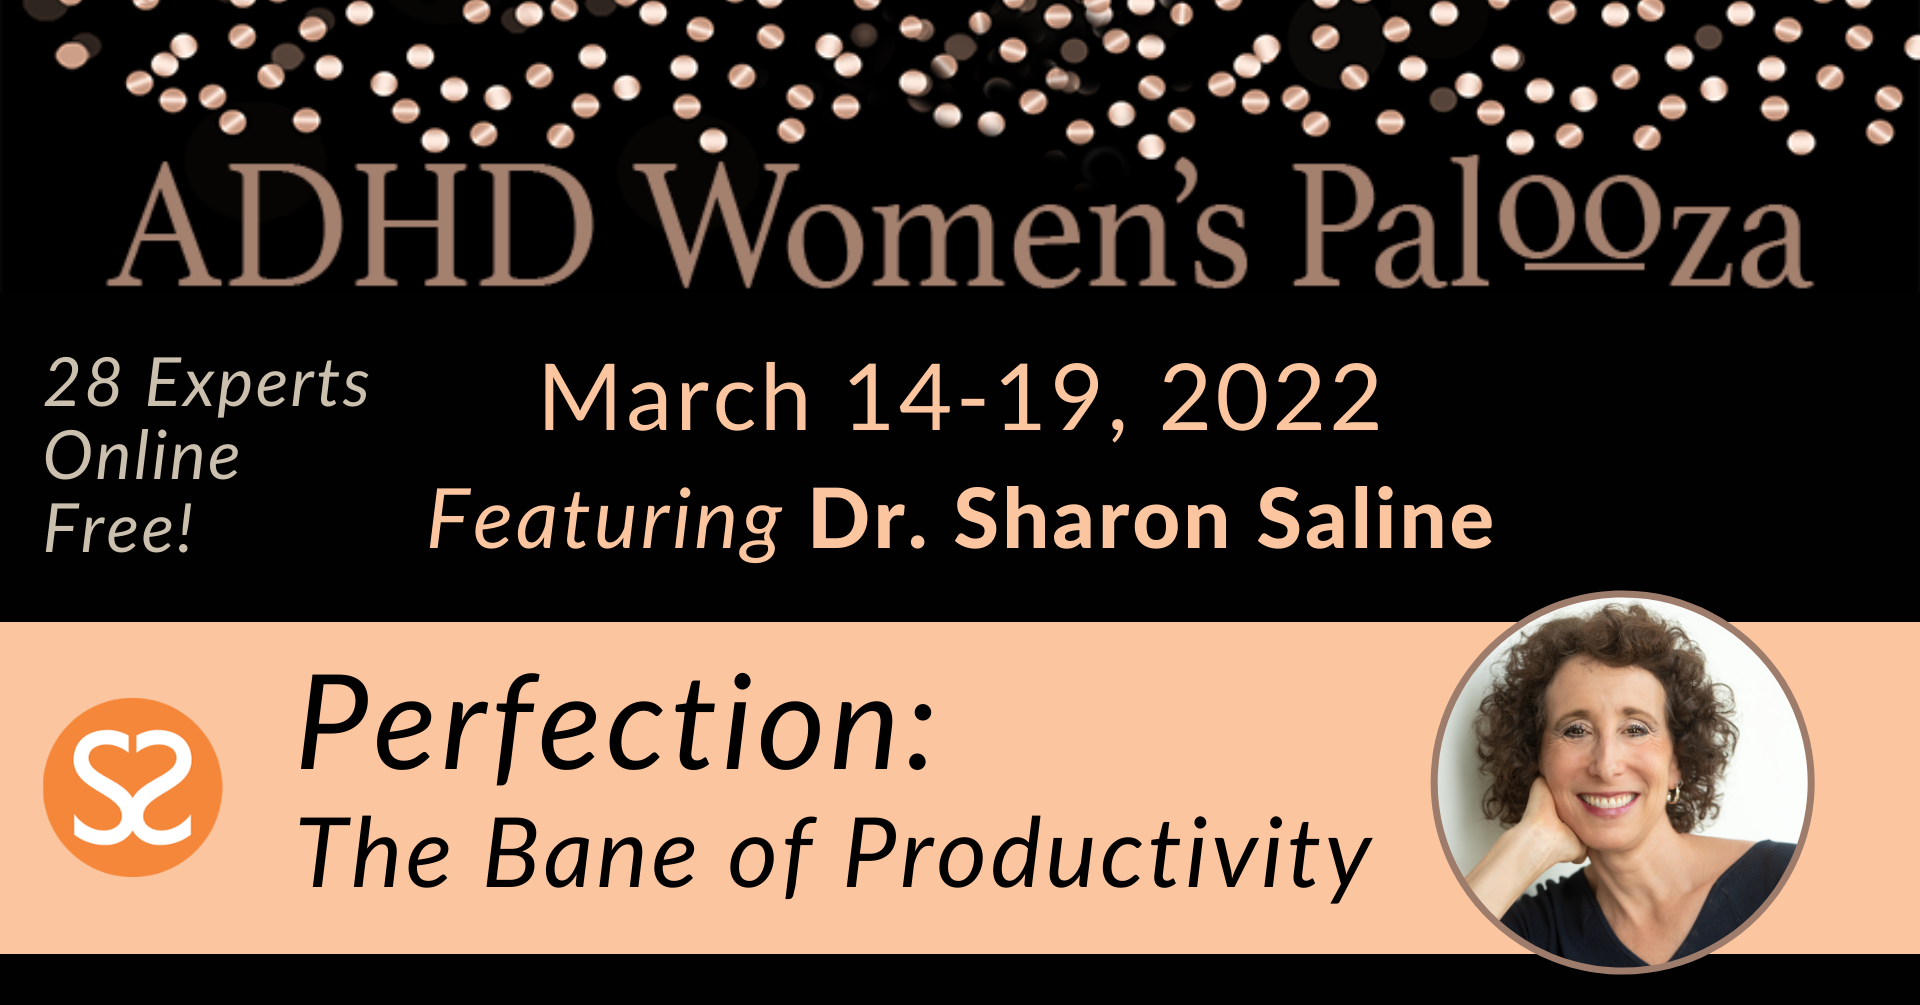 ADHD Women's Palooza 2022 Featuring Dr. Sharon Saline